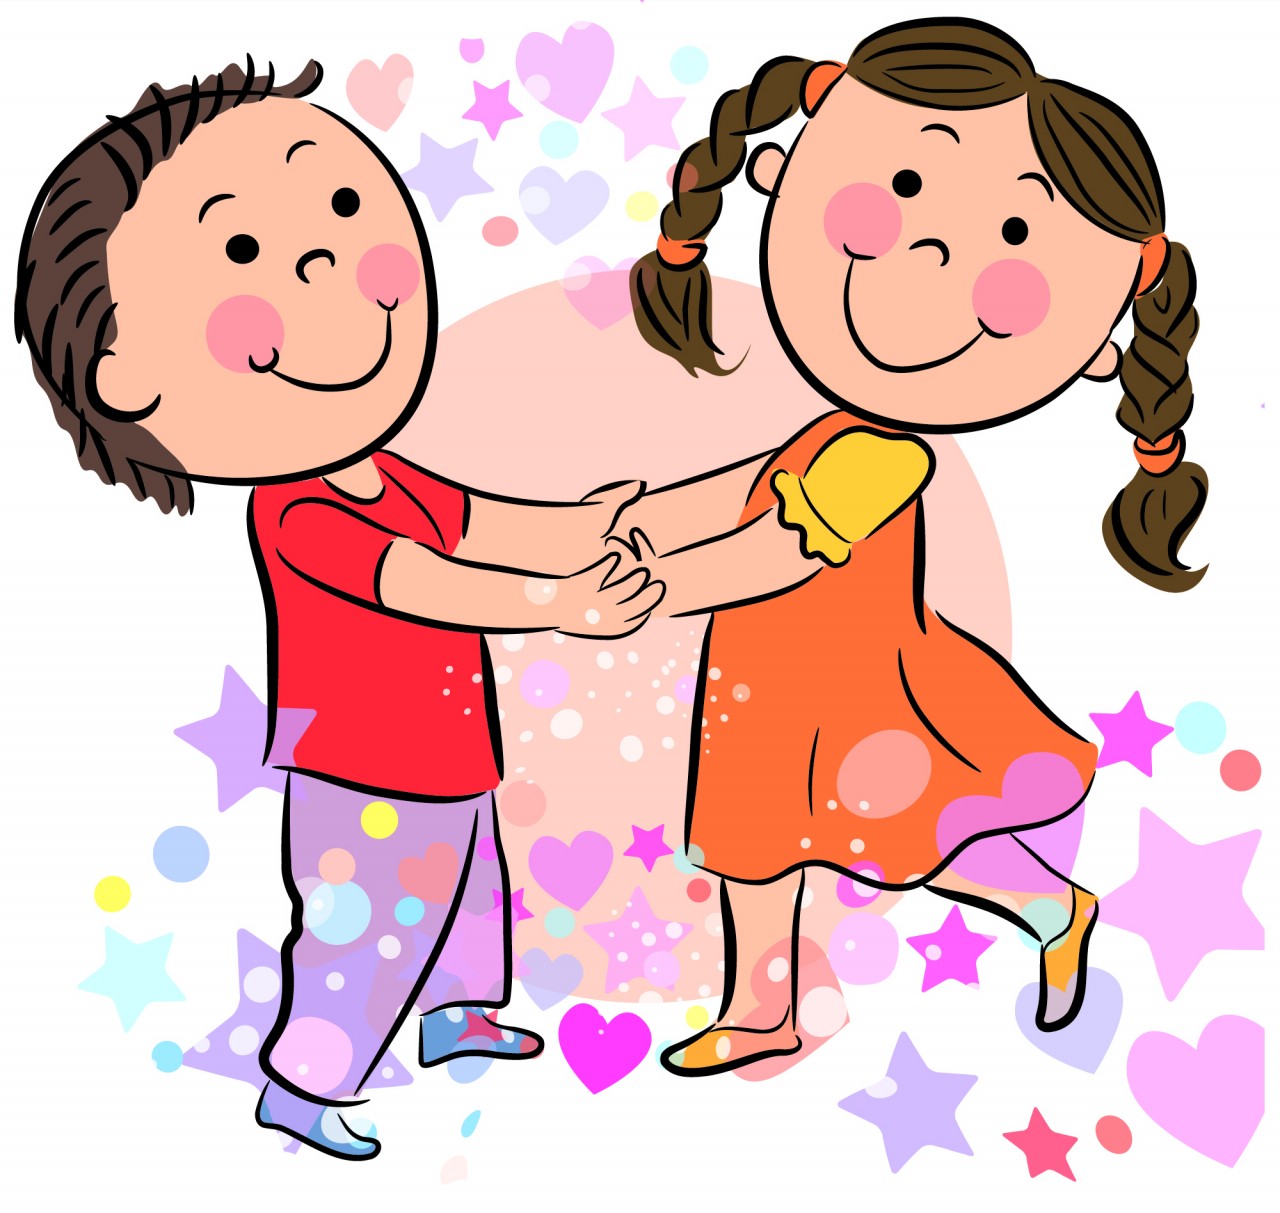 Happy Valentine's Day Funny Kids Cartoon Images | Amazing Photos